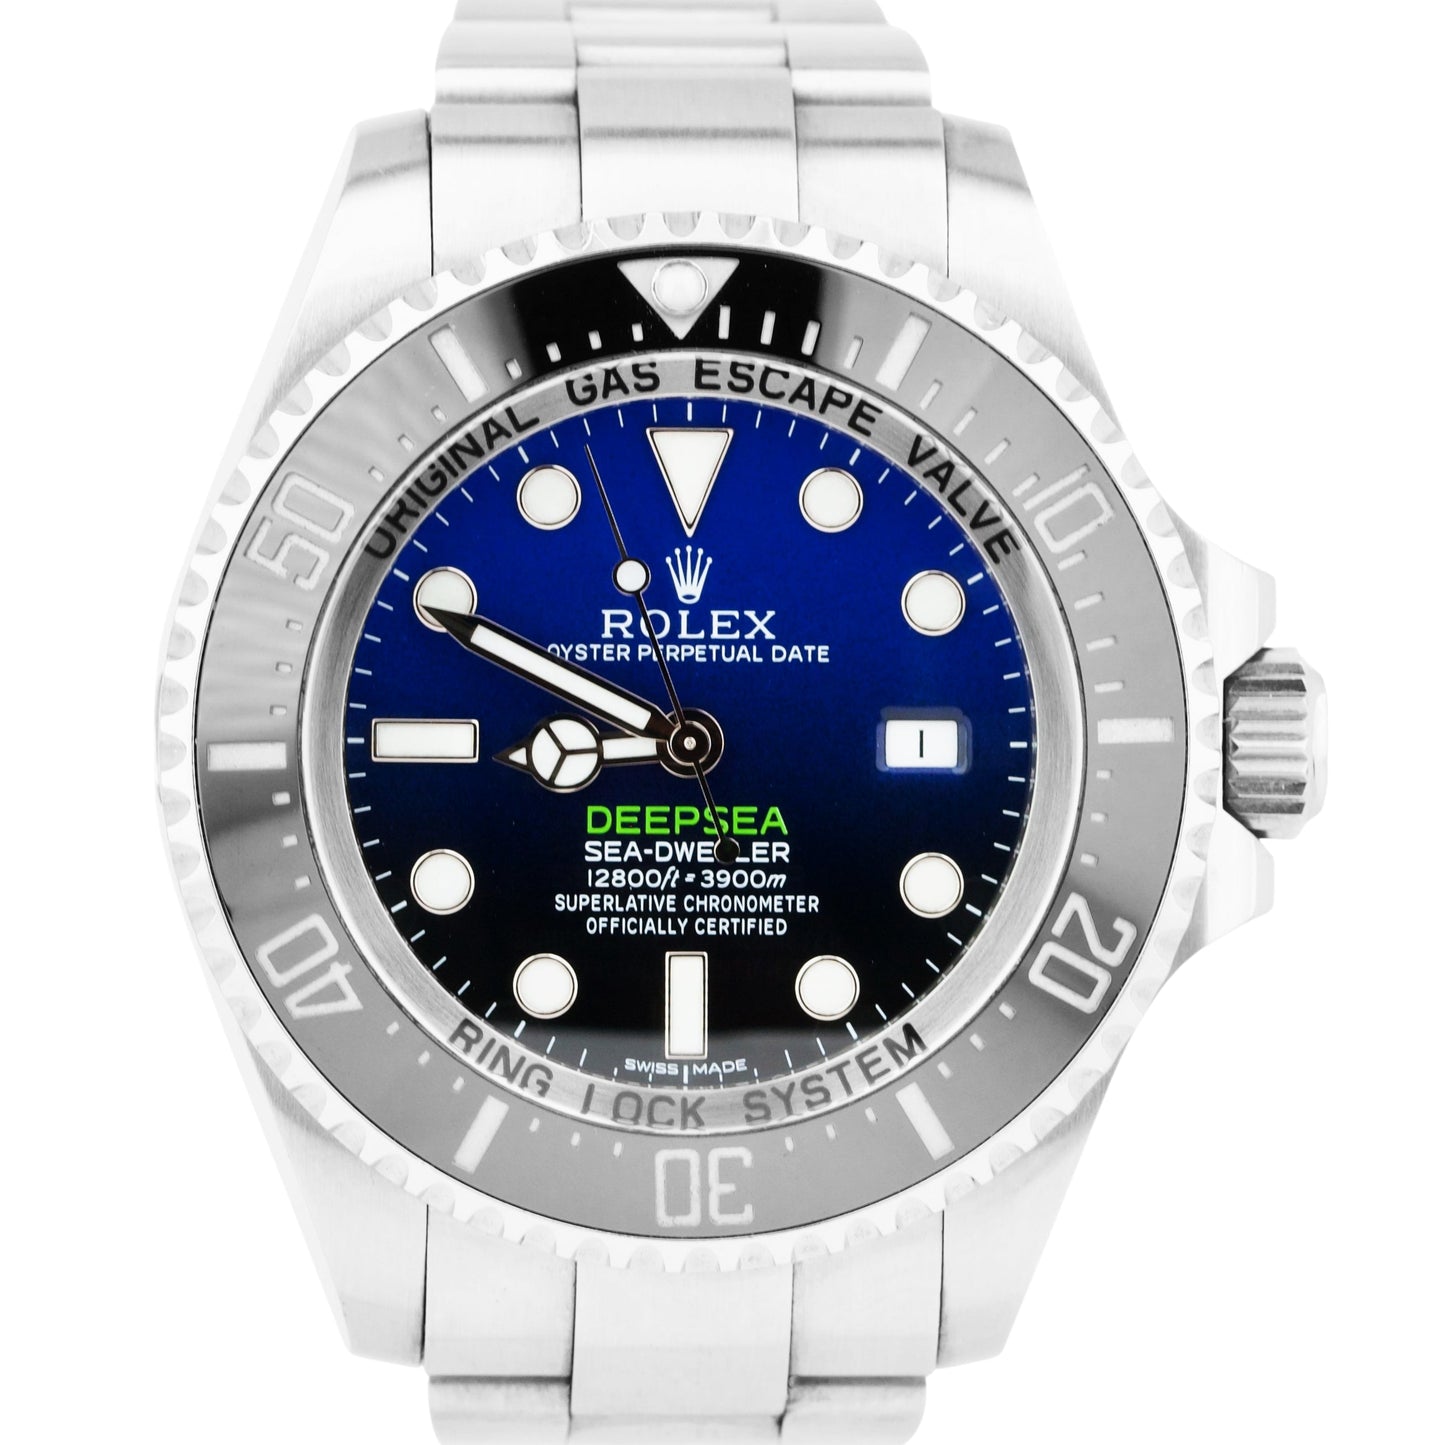 UNPOLISHED Rolex Sea-Dweller Deepsea James Cameron Blue Stainless 116660 44mm BP